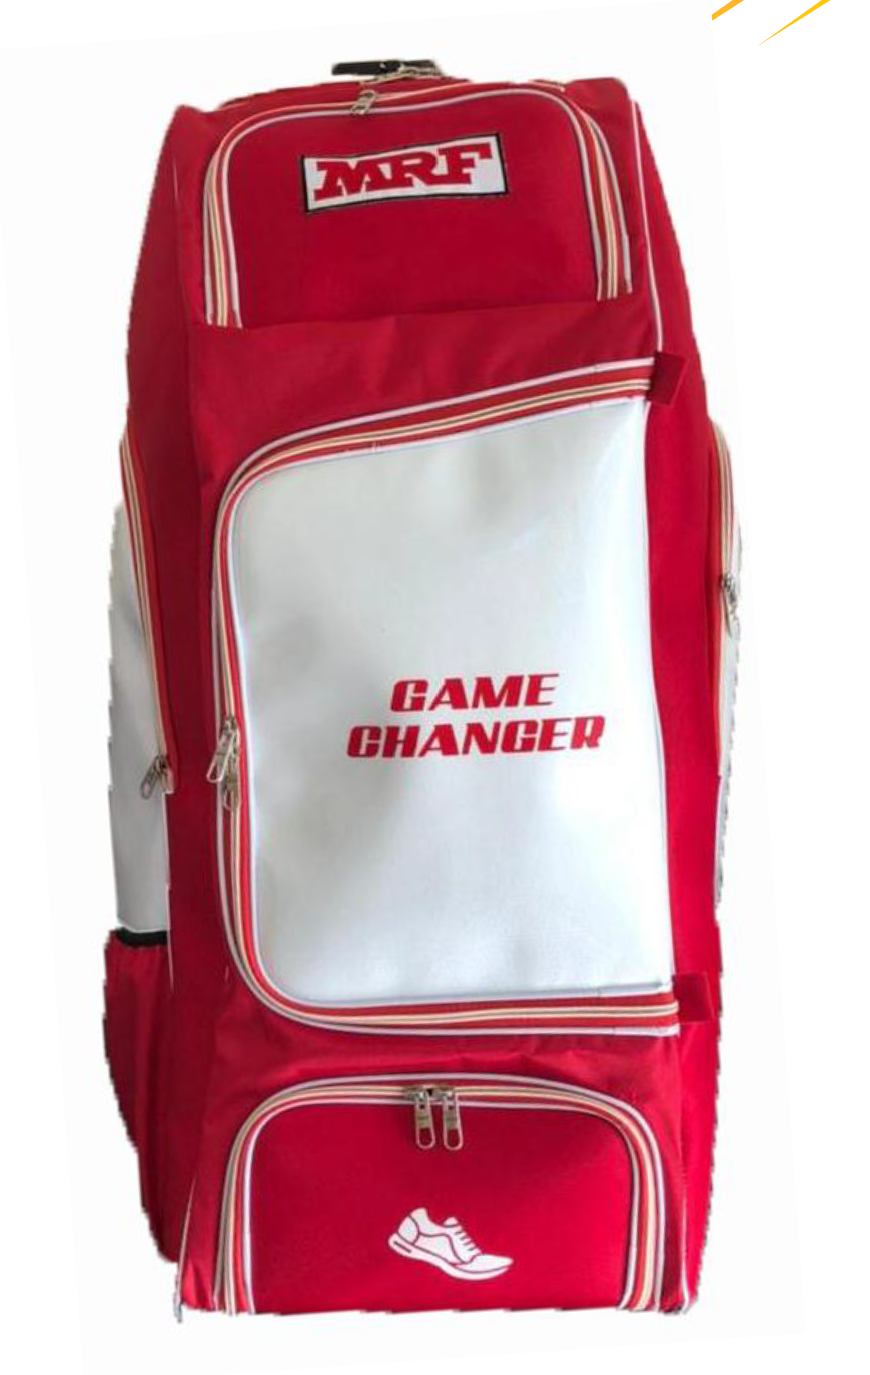 MRF Game Changer Cricket Kit Bag